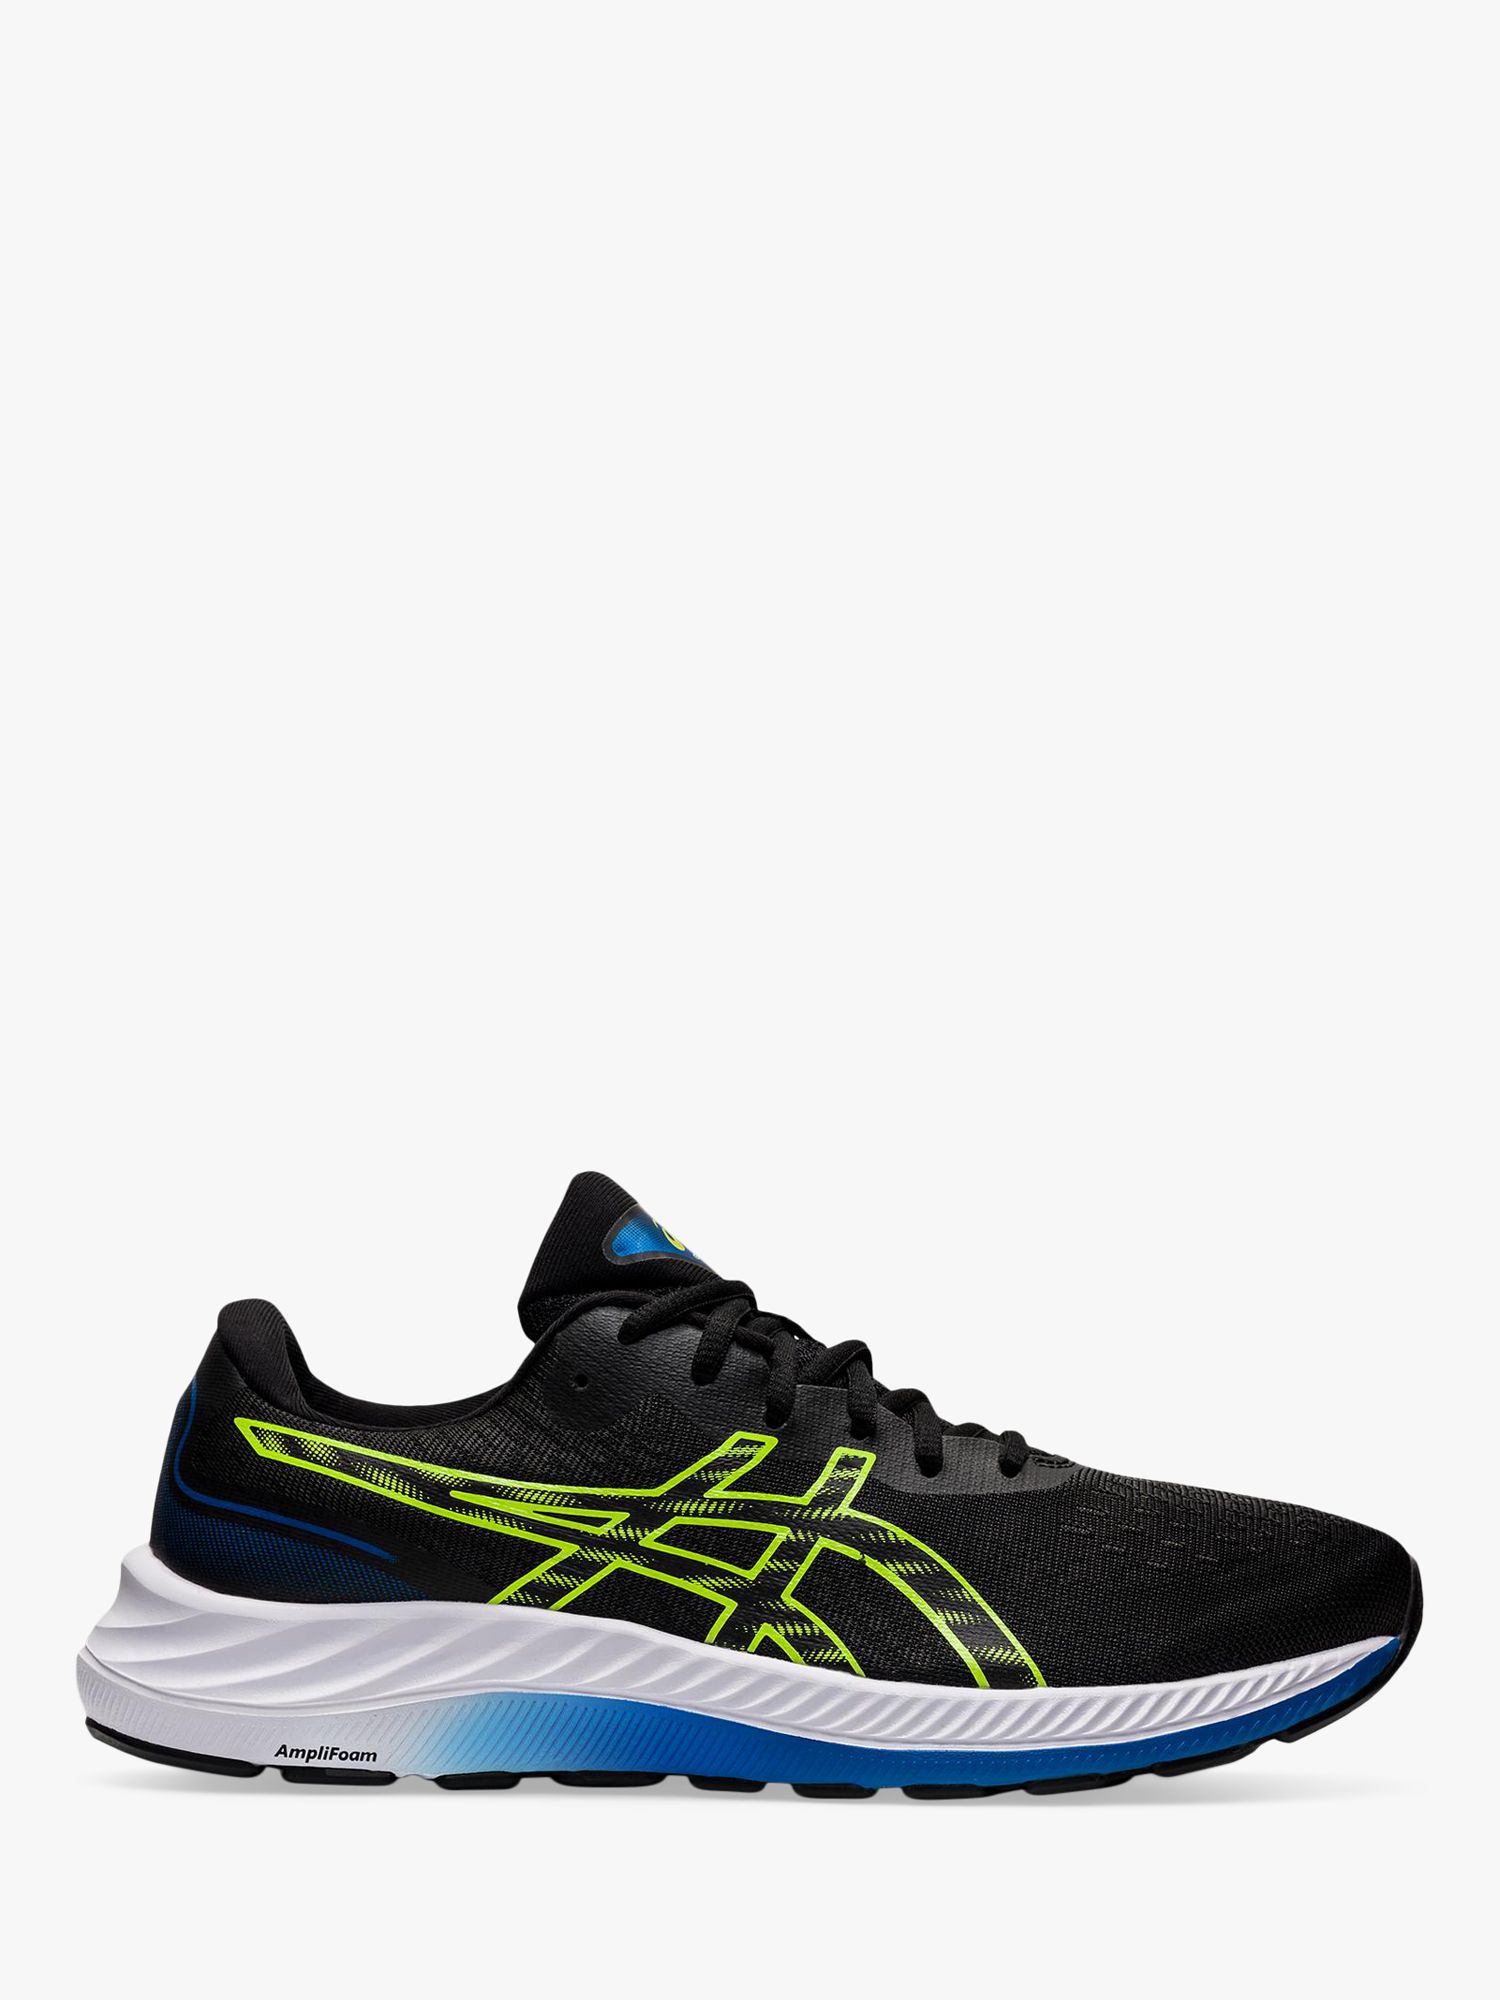 ASICS GEL-EXCITE 9 Men's Running Shoes, Black/Hazard Green, 11